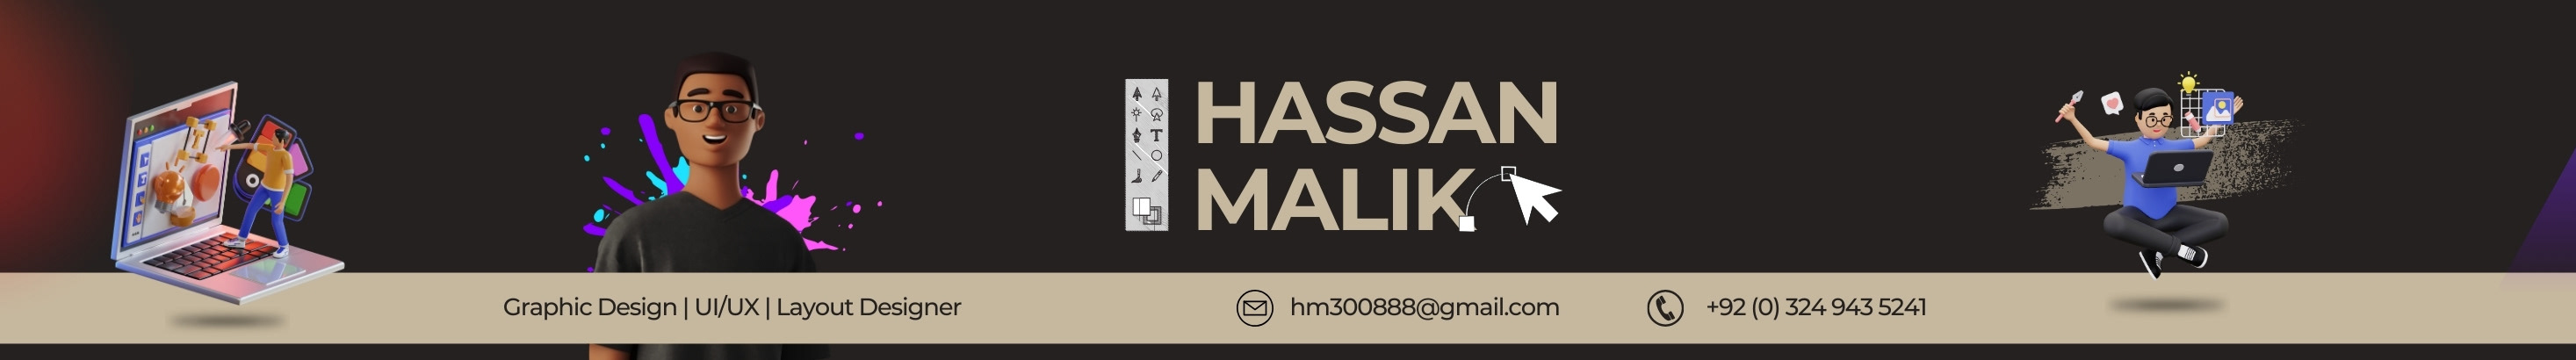 Hassan Maliks profilbanner